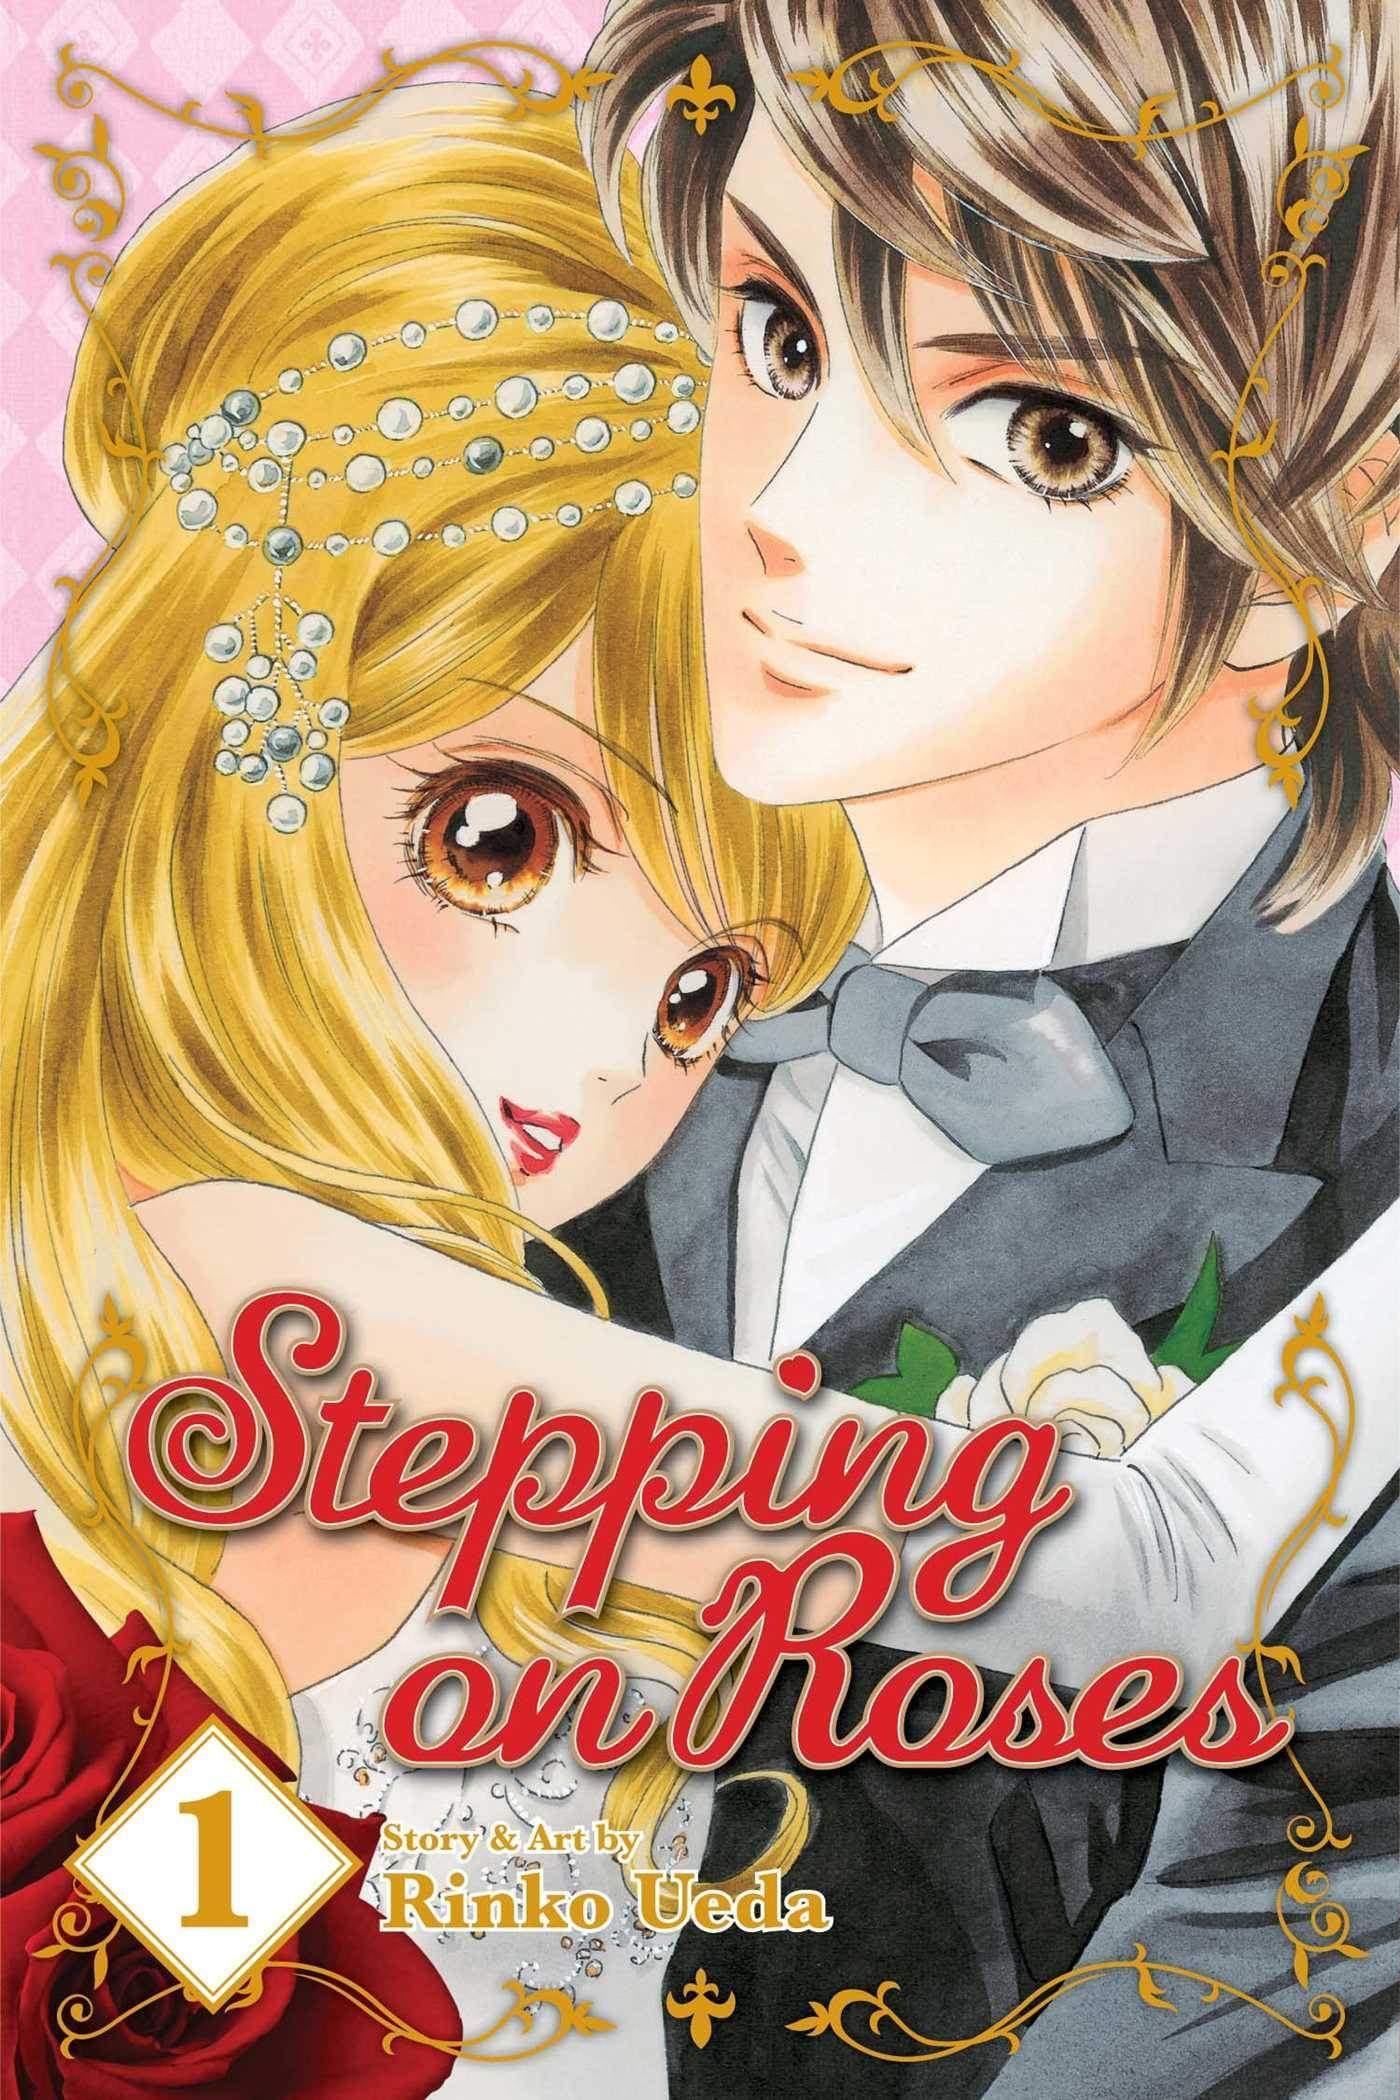 Stepping on Roses (Manga) Vol. 1 - Tankobonbon